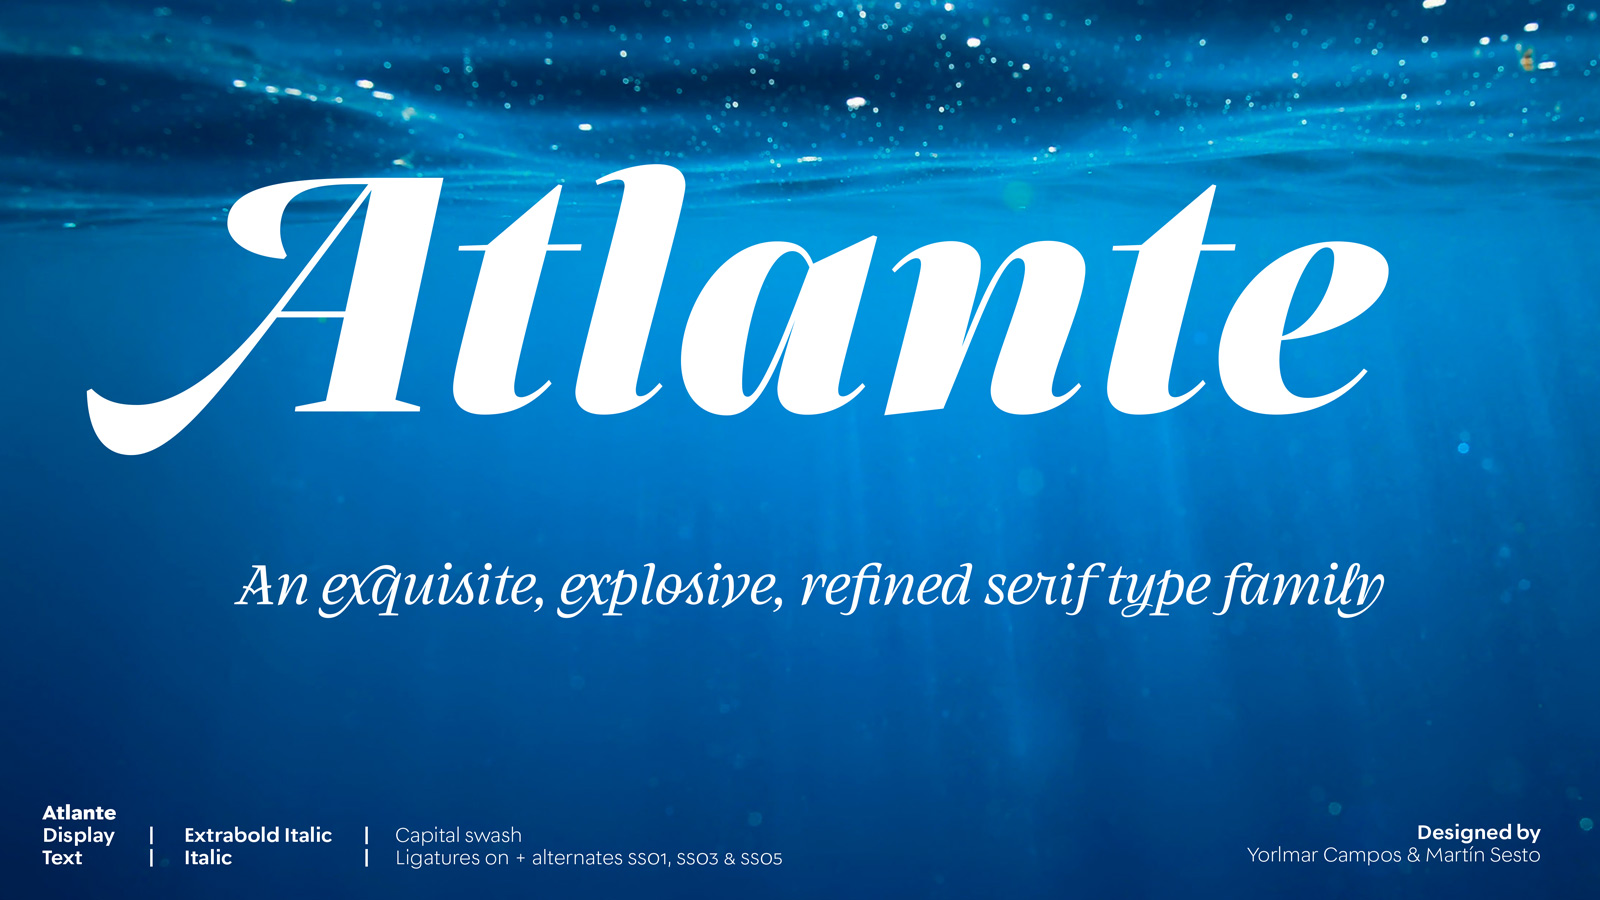 New release Atlante by Yorlmar Campos and Martin Sesto